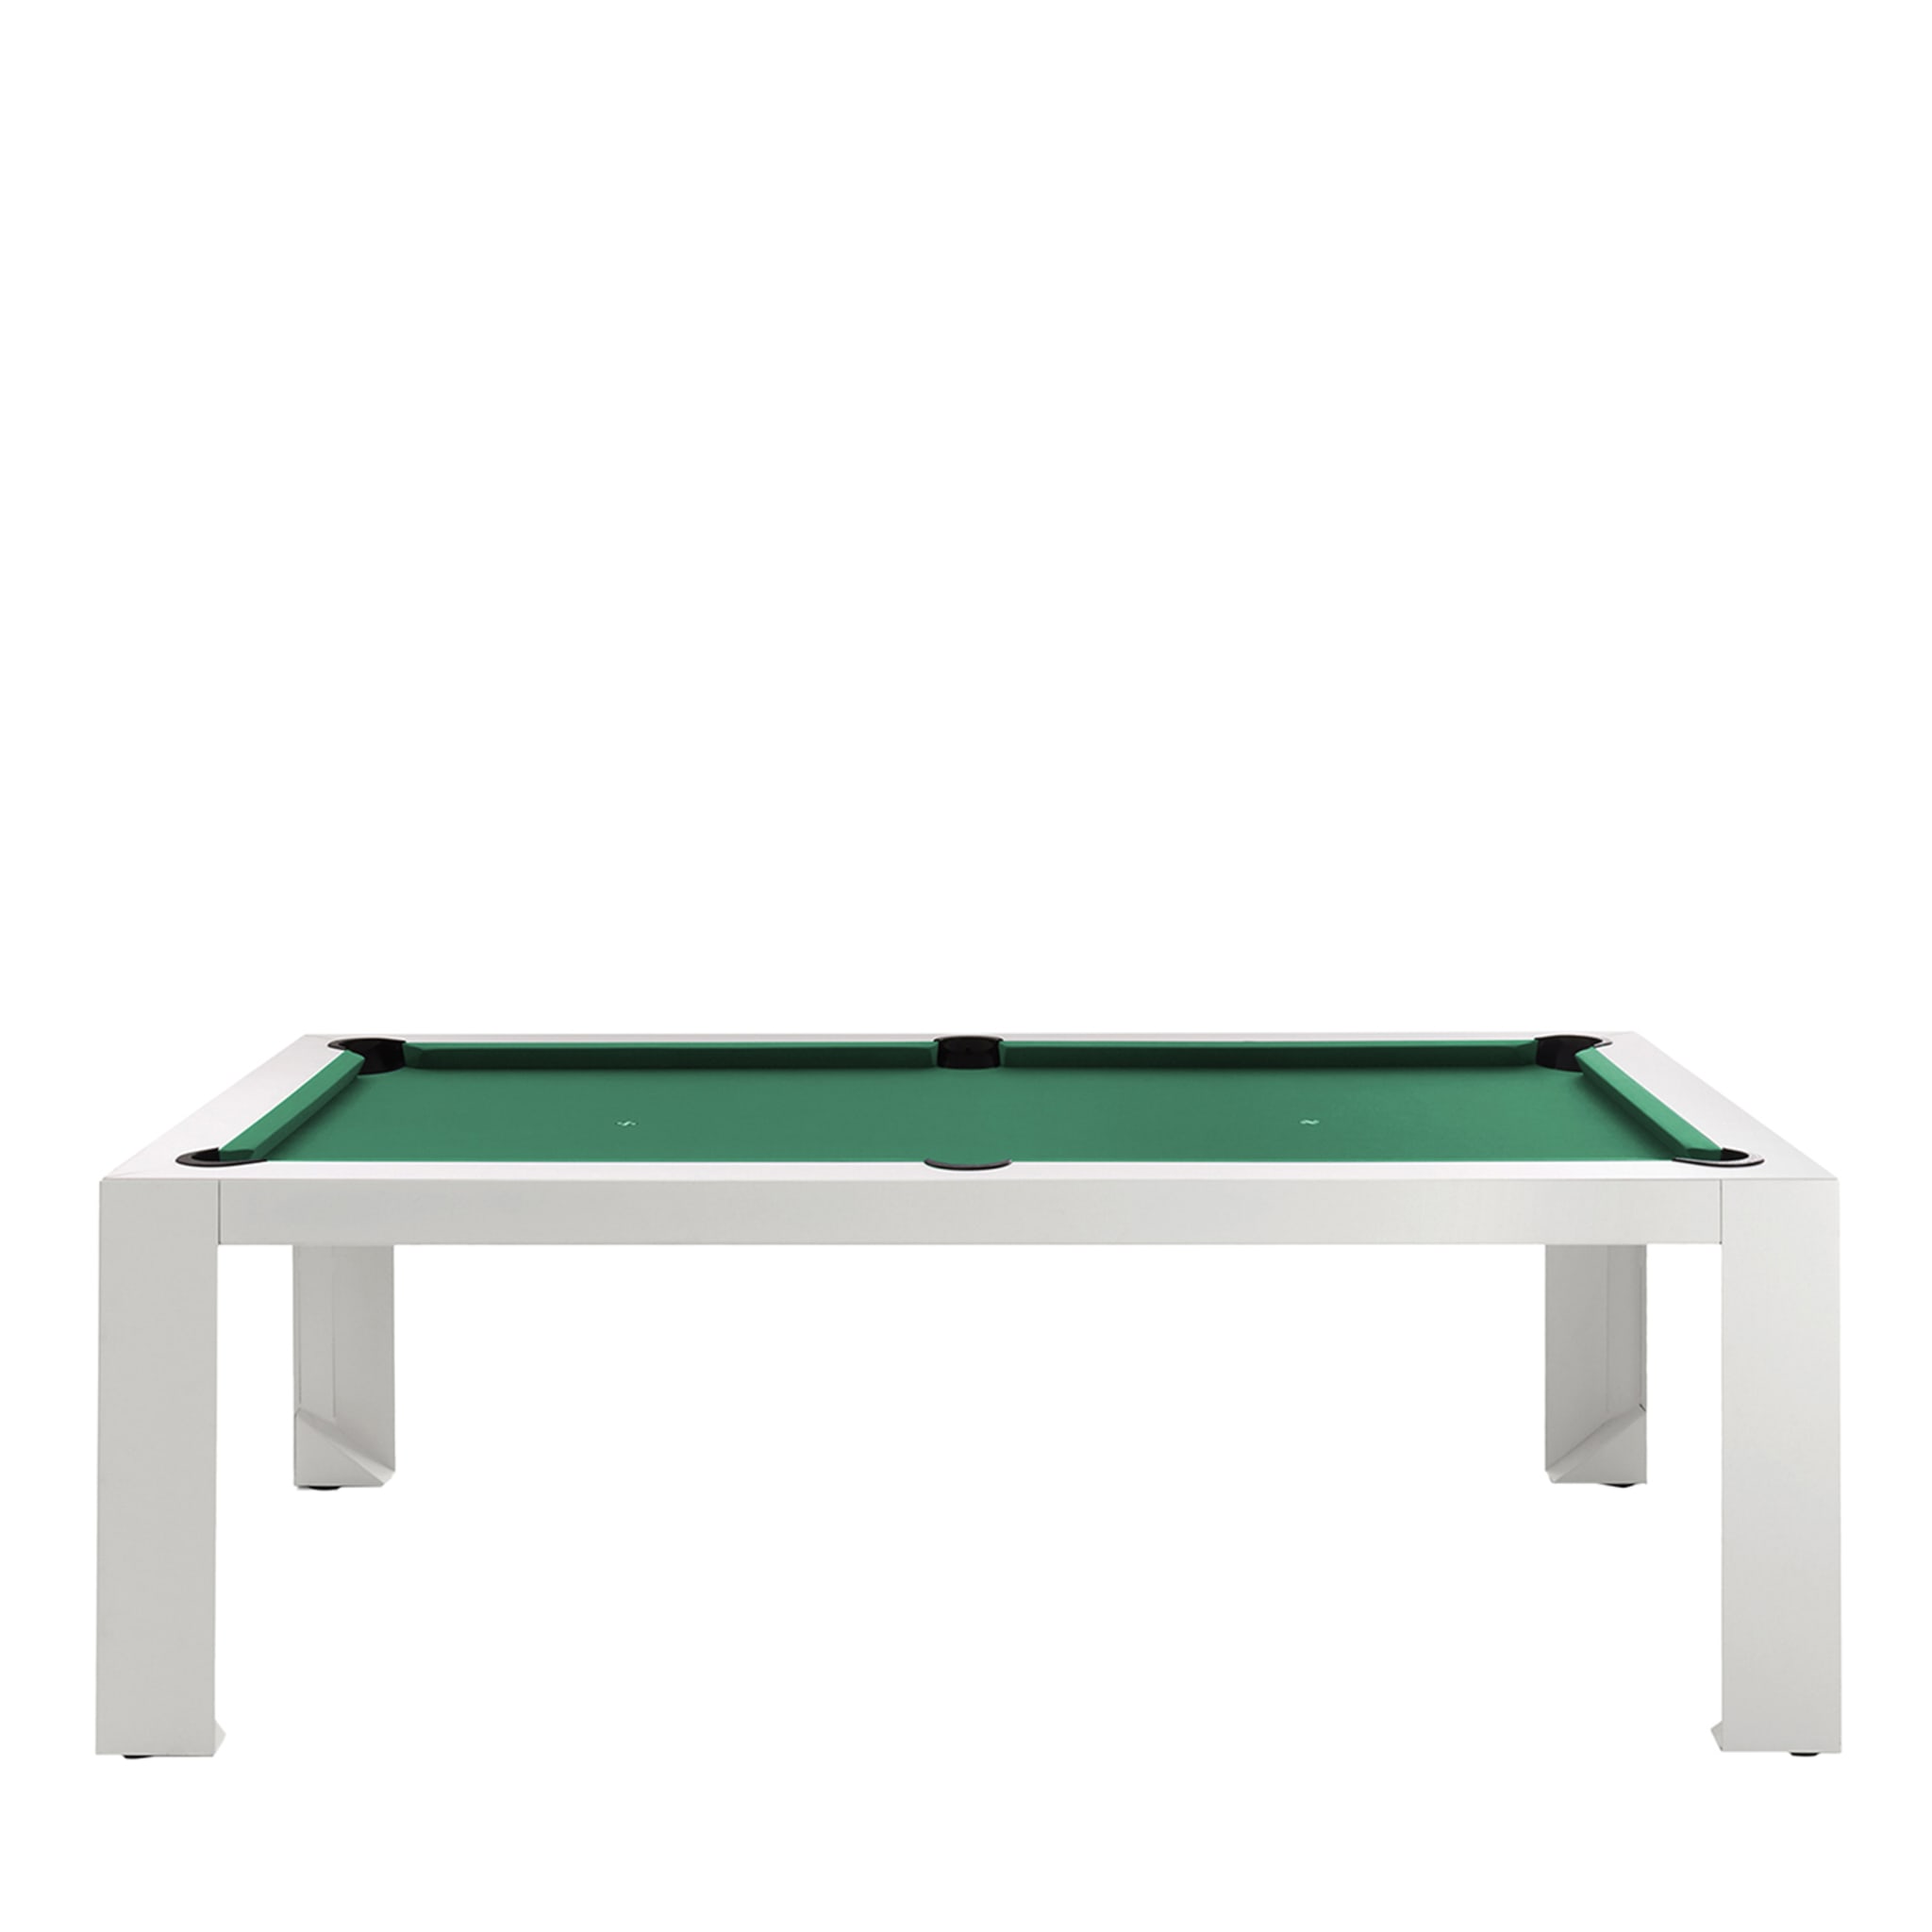 Carambola Cubista 7' White Pool Table by Basaglia + Rota Nodari - Main view